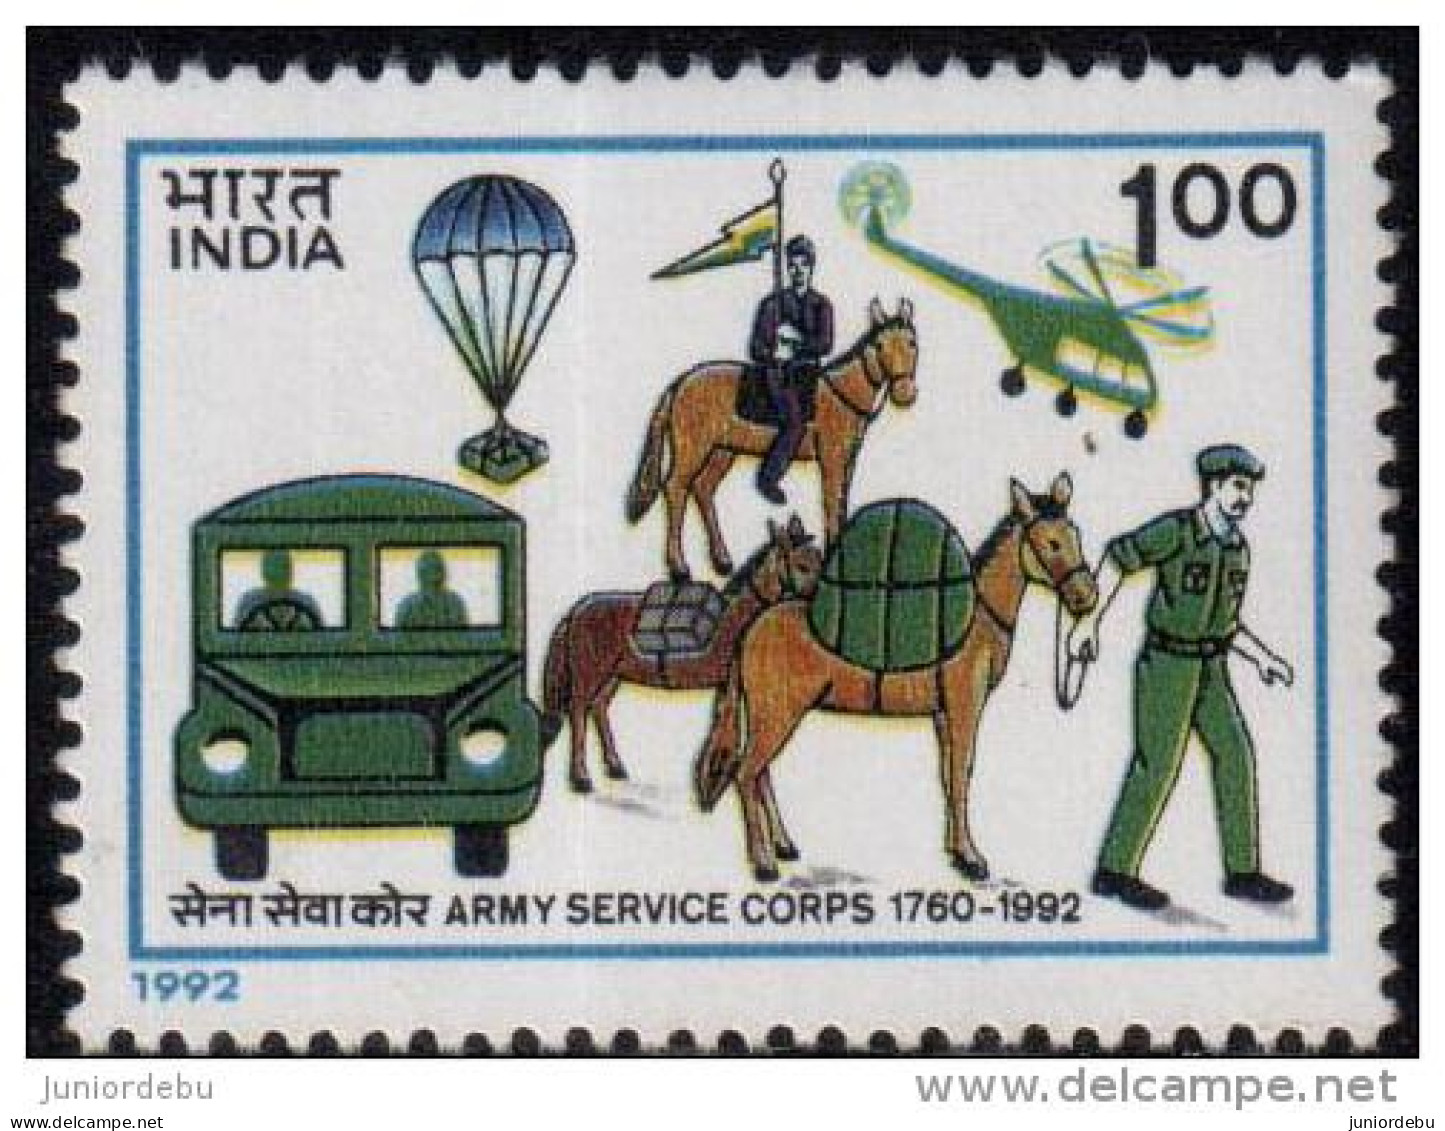 India -1992 - Army Service Corps  -  MNH. ( OL 10/07/2013 ) - Ongebruikt